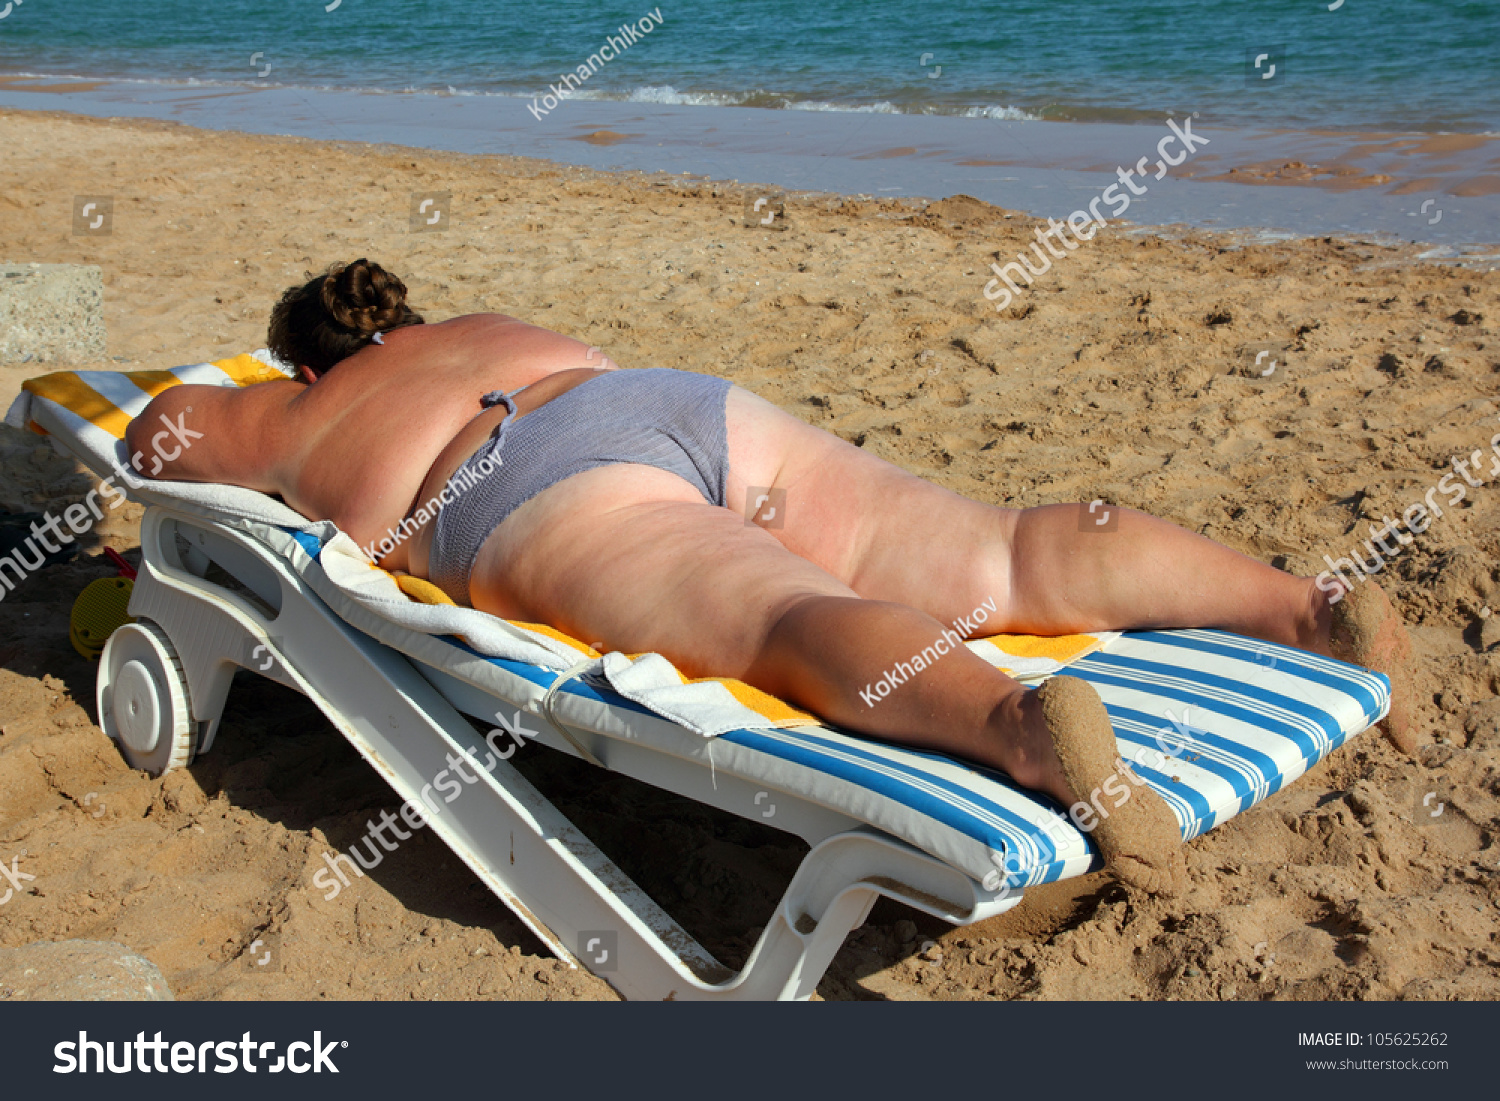 stock-photo-vacation-overweight-woman-su